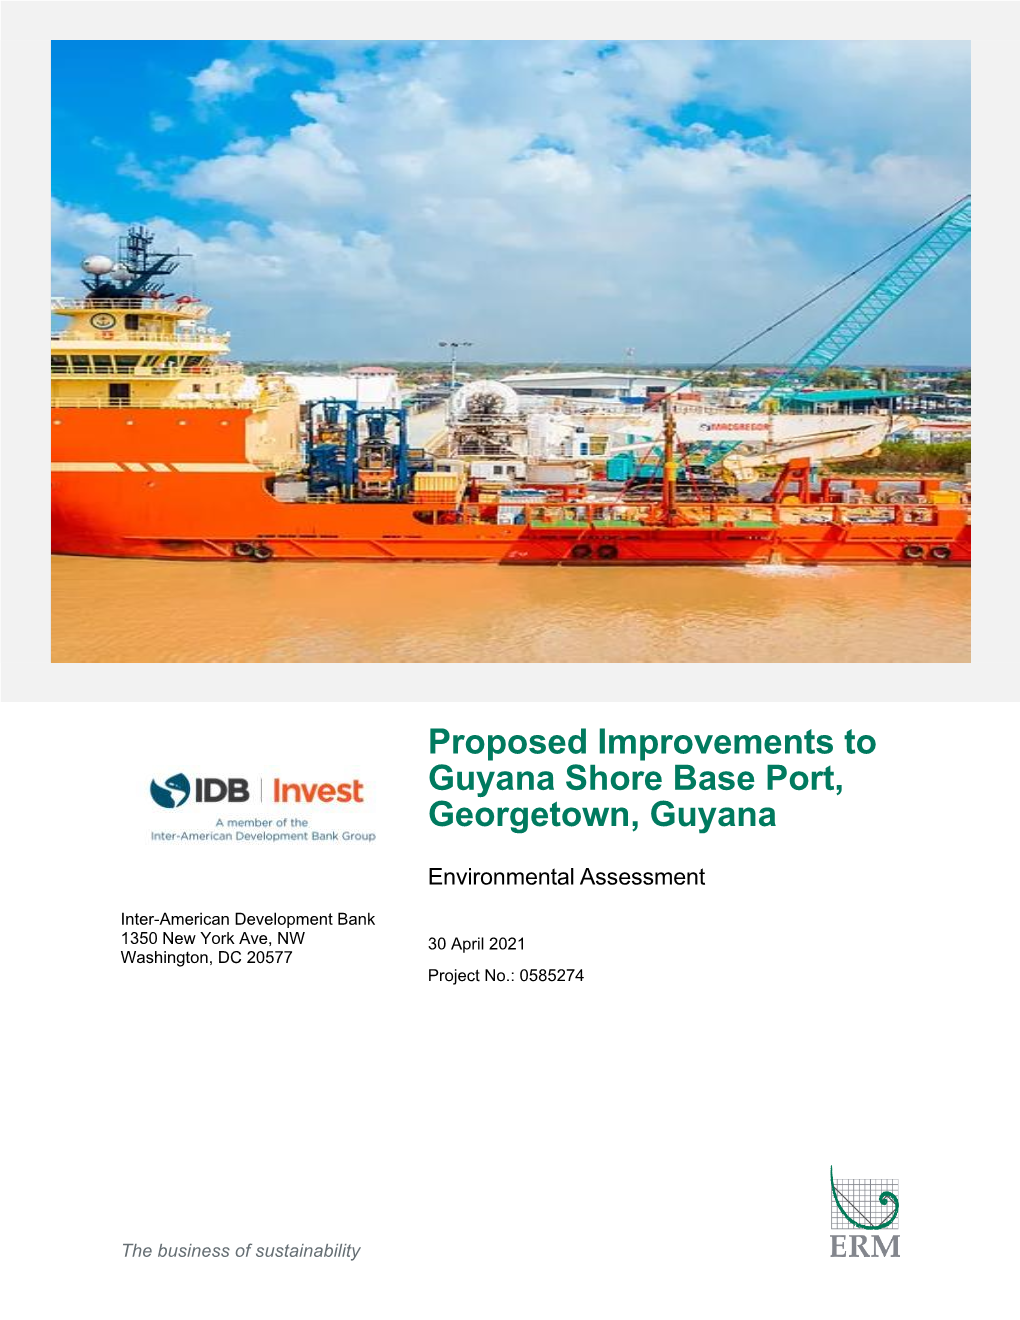 Proposed Improvements to Guyana Shore Base Port, Georgetown, Guyana